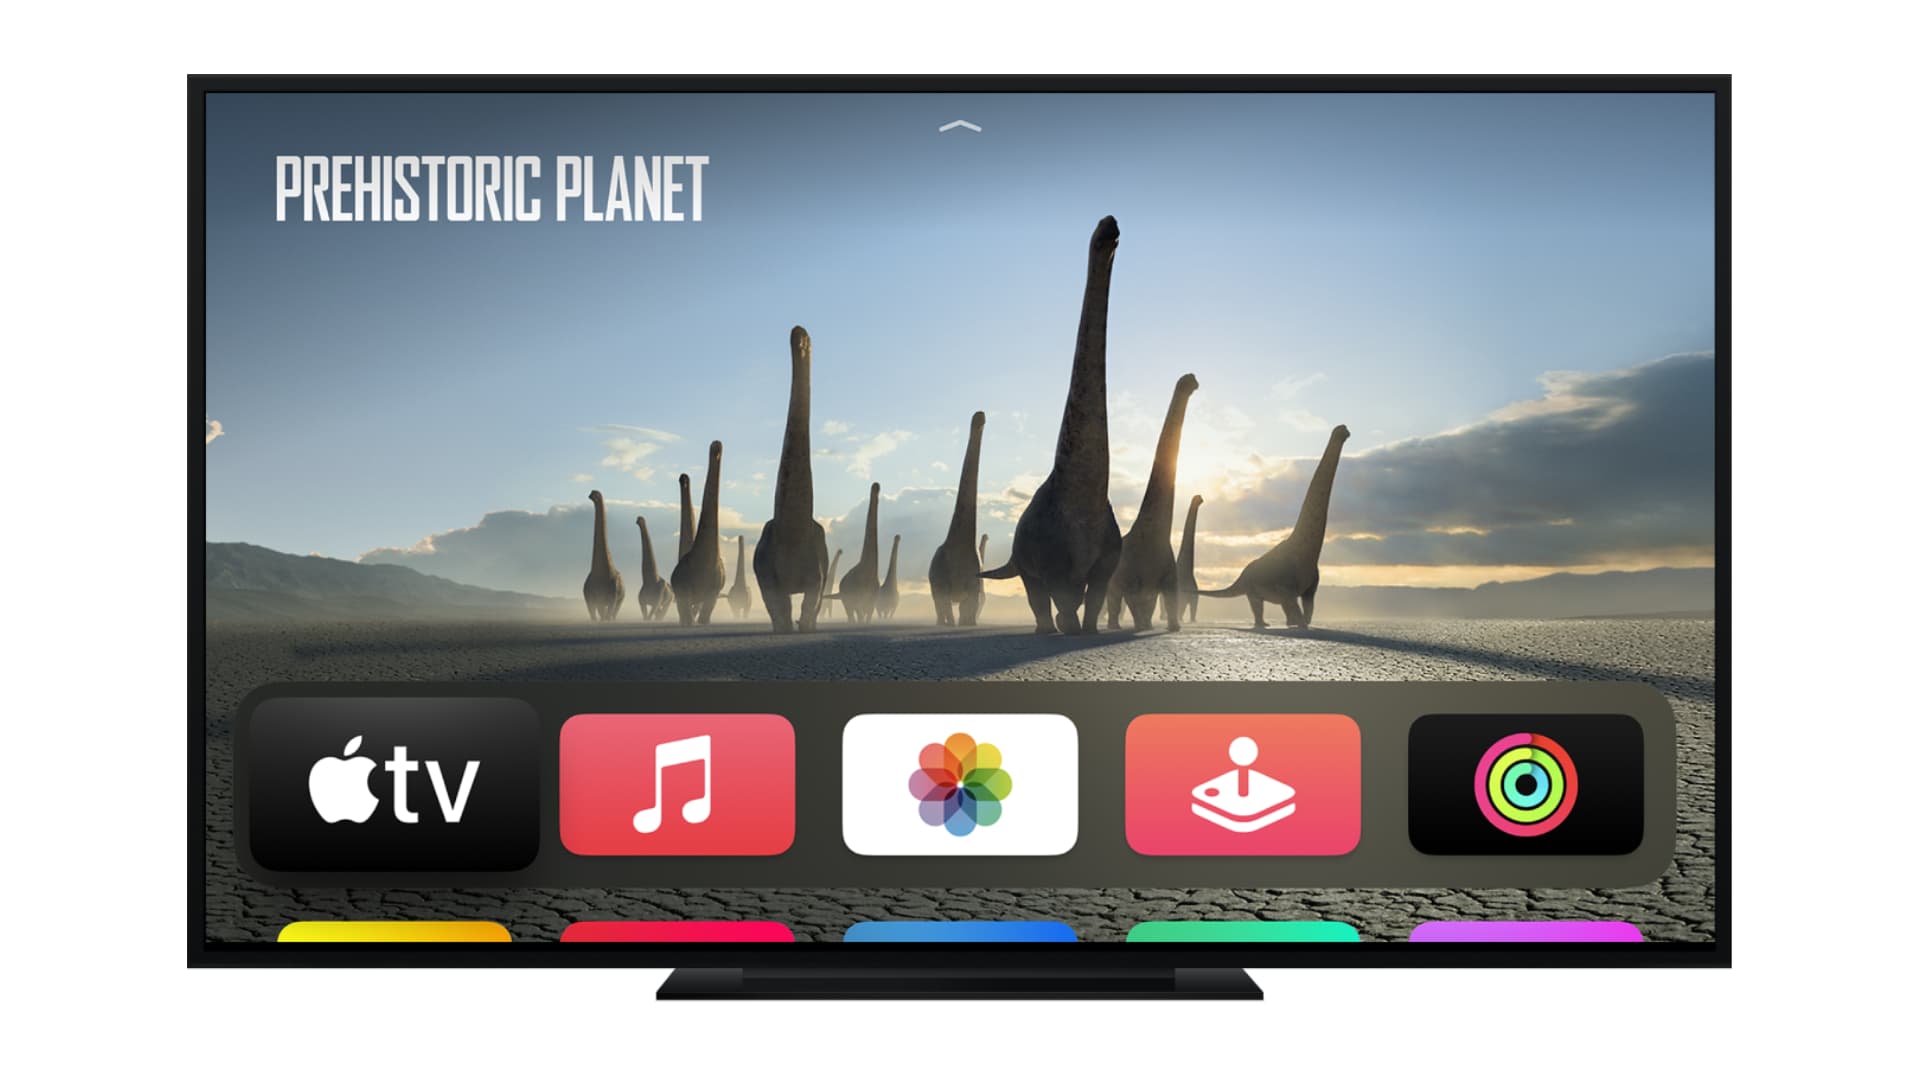 Apple TV Home Screen showcasing Prehistoric Planet